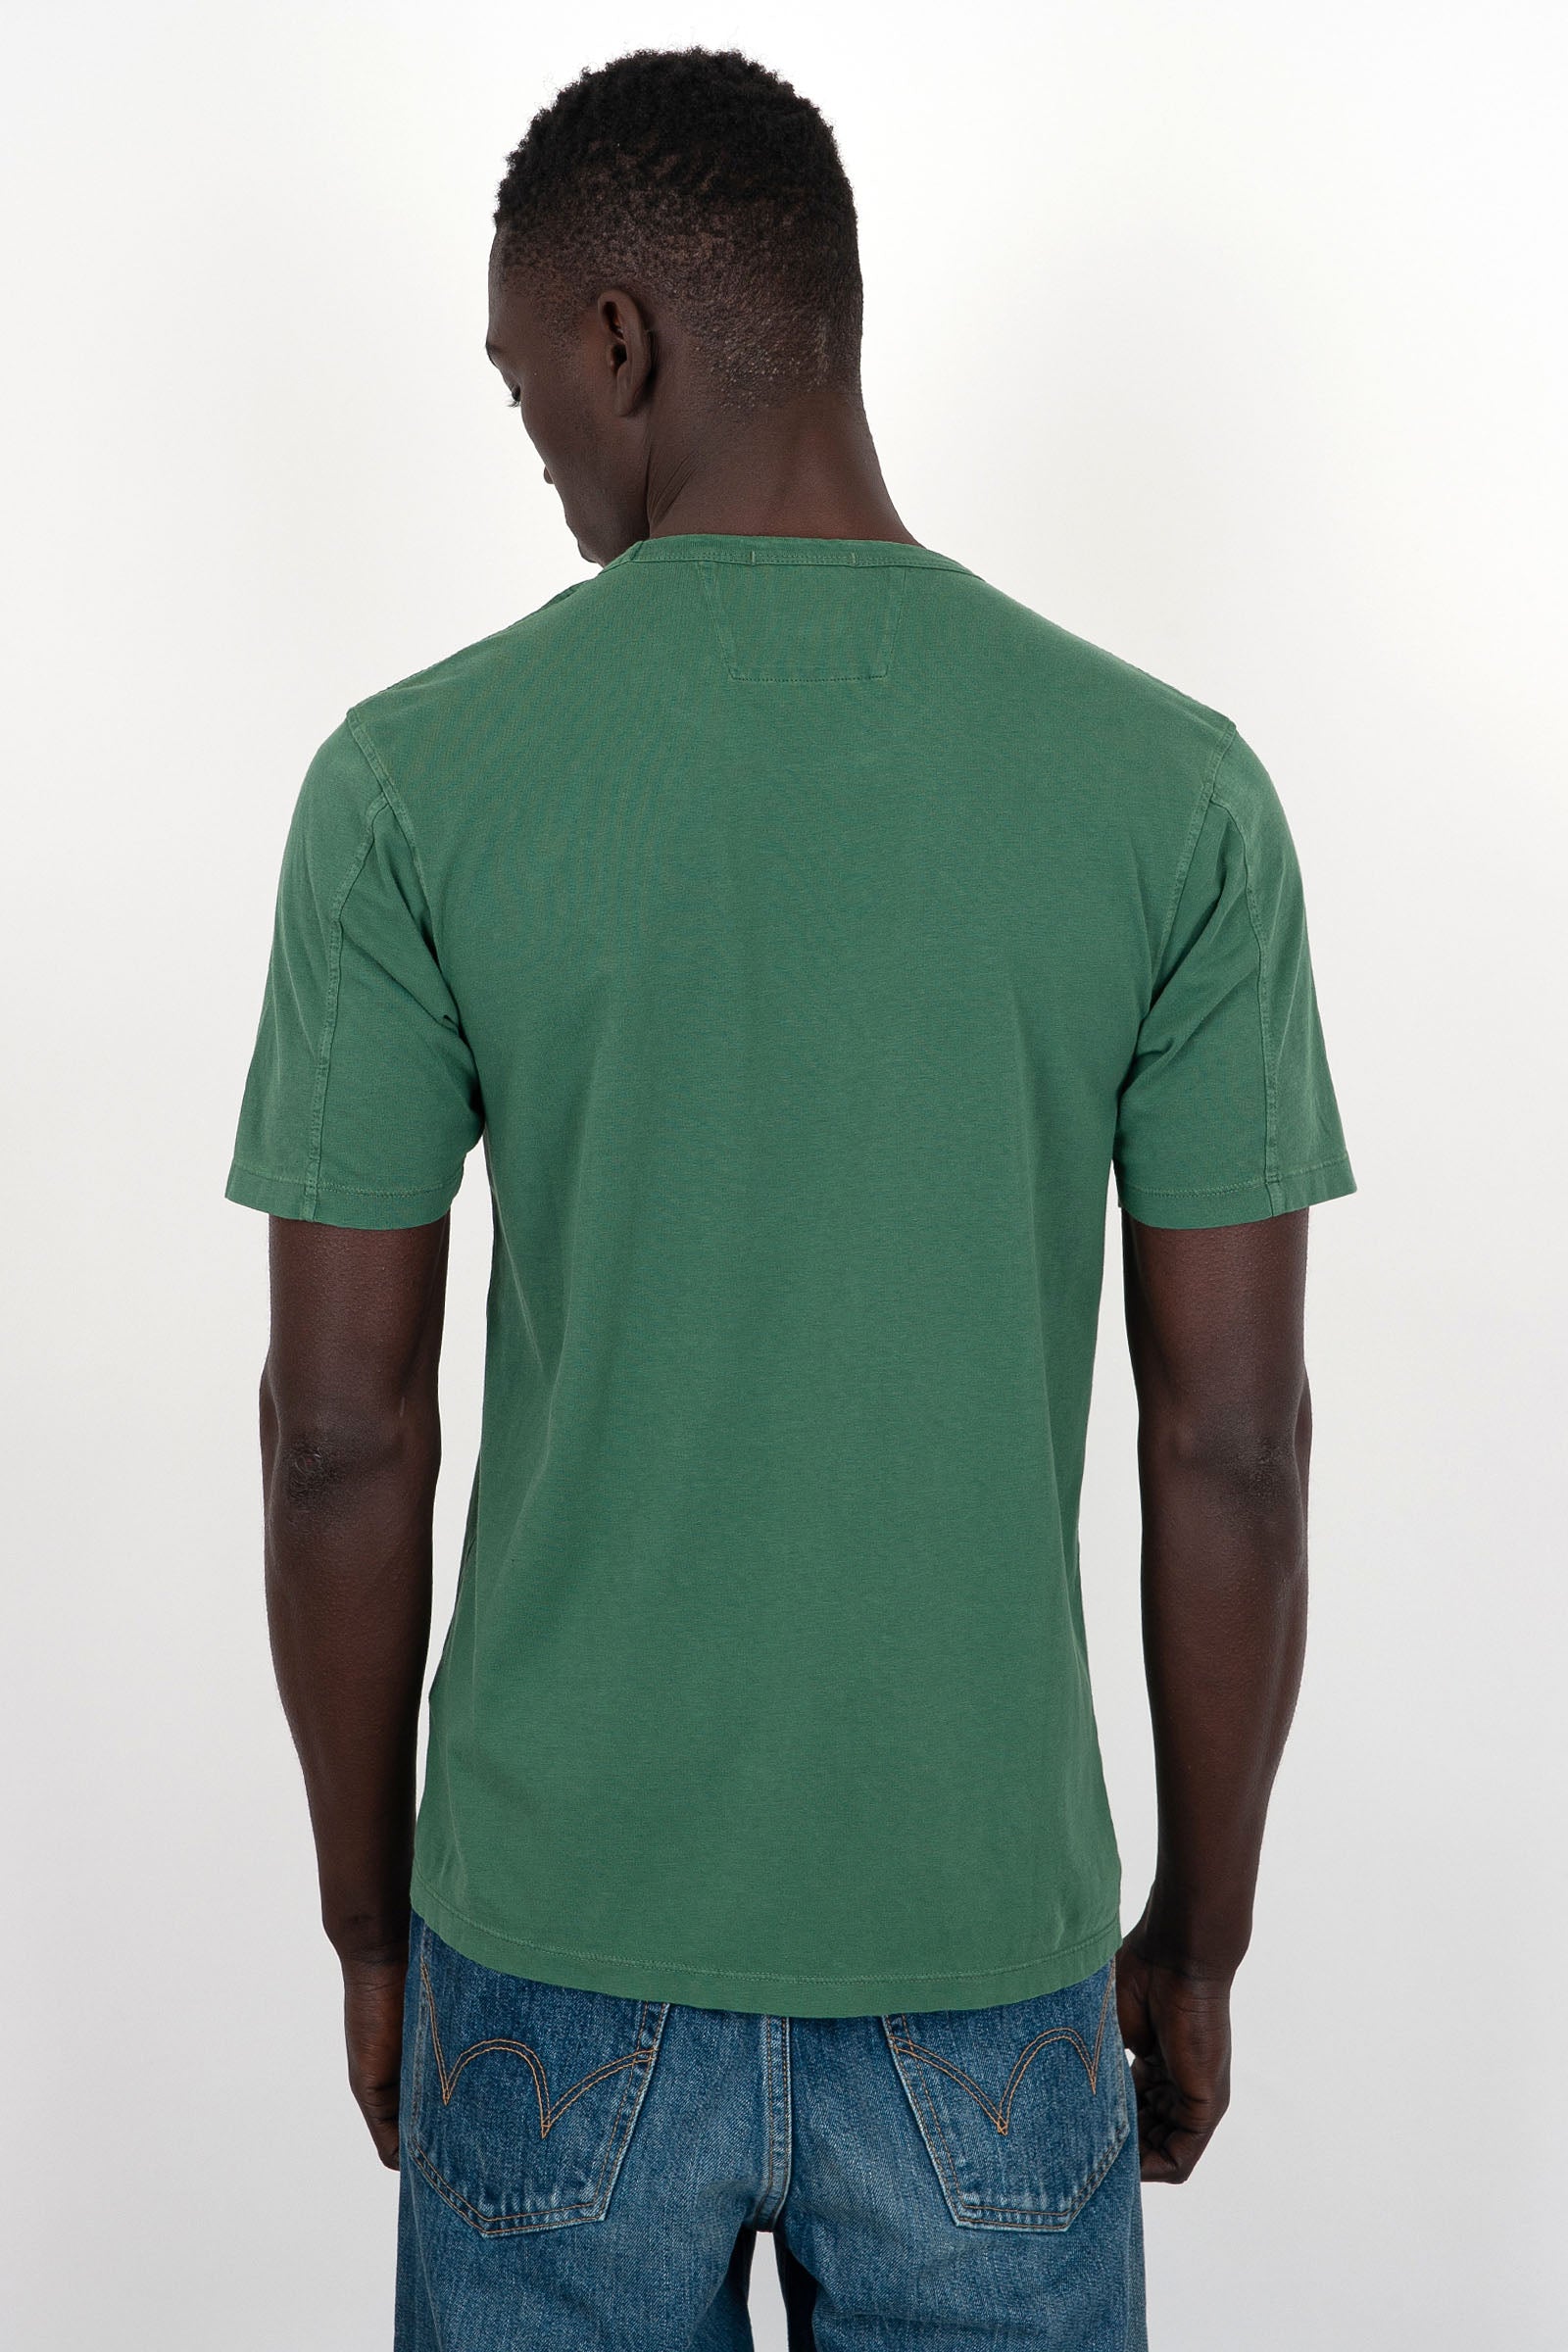 C.P. Company T-shirt 24/1 Jersey Resist Dyed Logo Green - 4